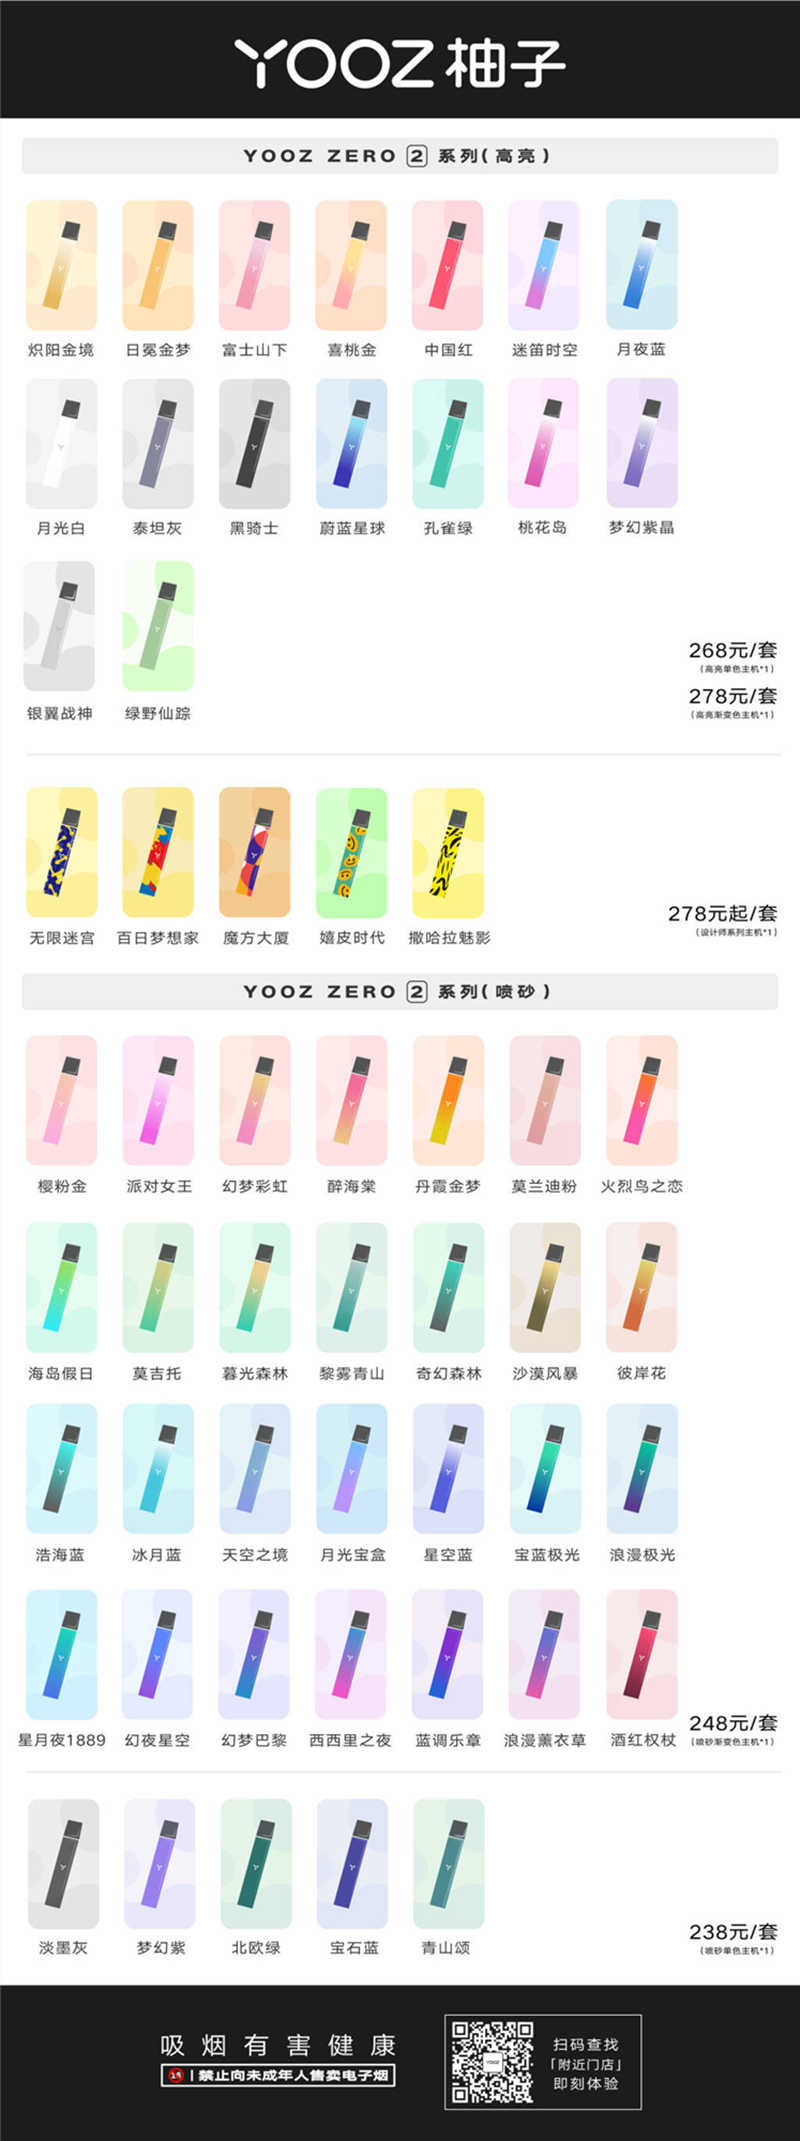 yooz柚子电子烟官方售价是多少 - 第1张